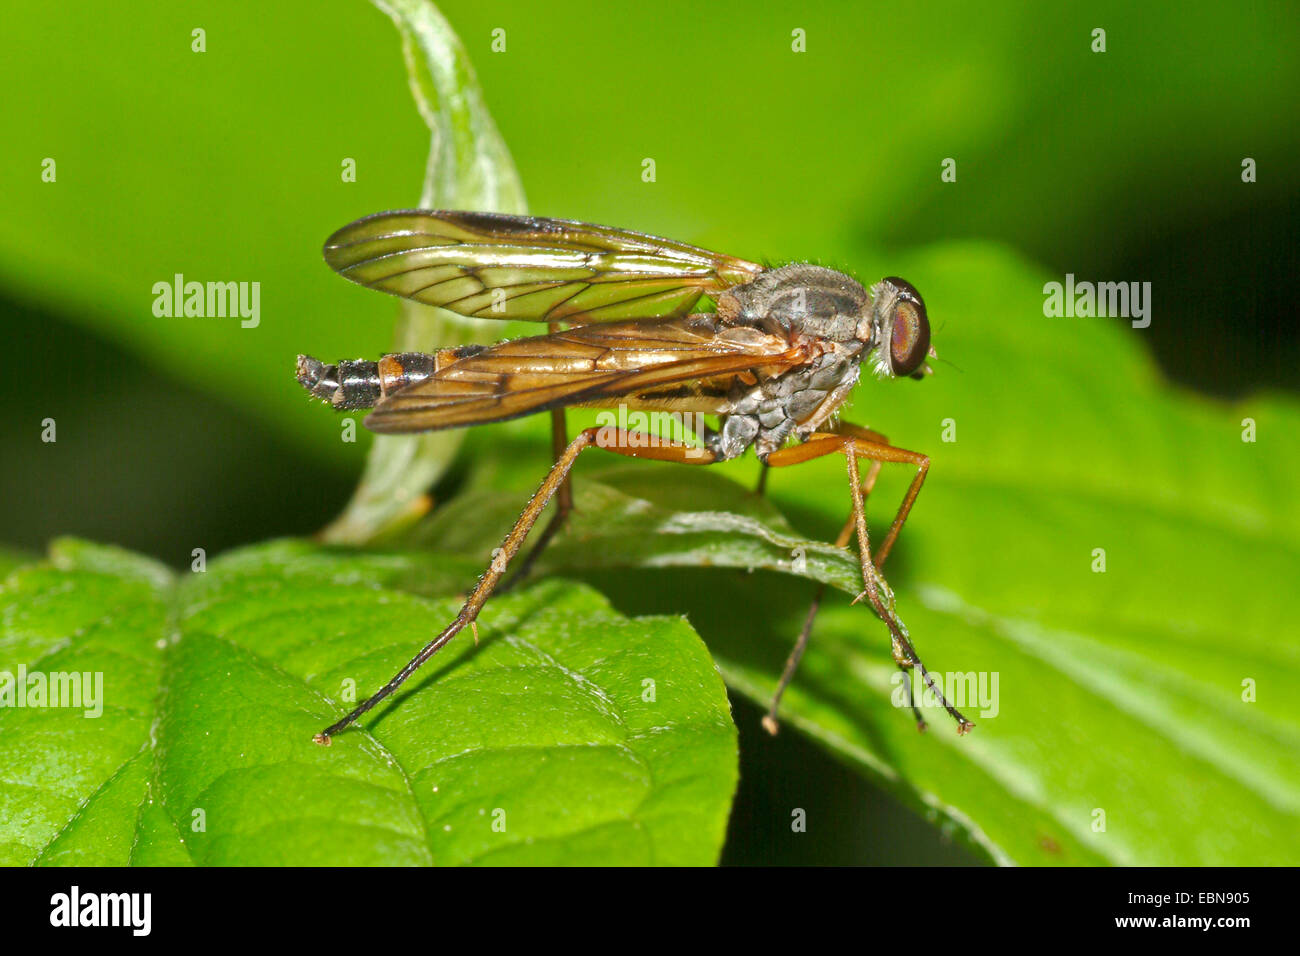 Snipe fly (Symphoromyia immaculata), seduta su una foglia, Germania Foto Stock